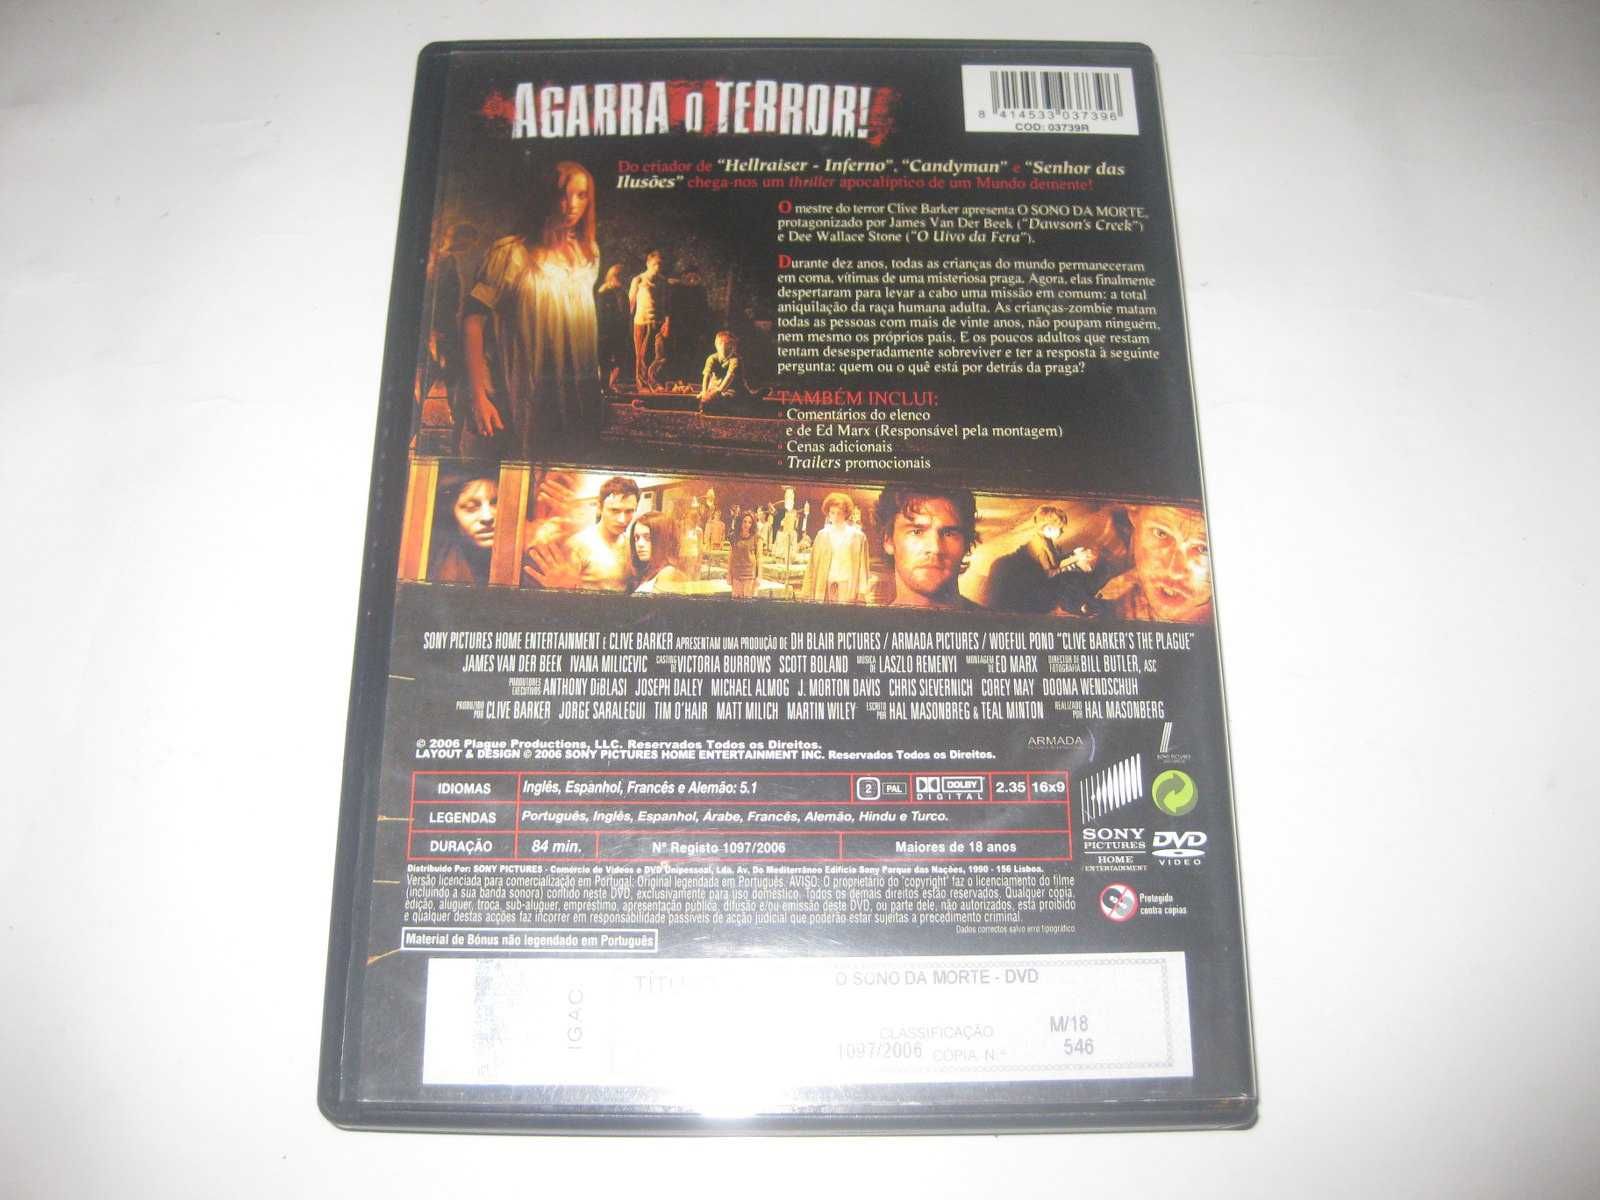 DVD "O Sono da Morte" com James Van Der Beek